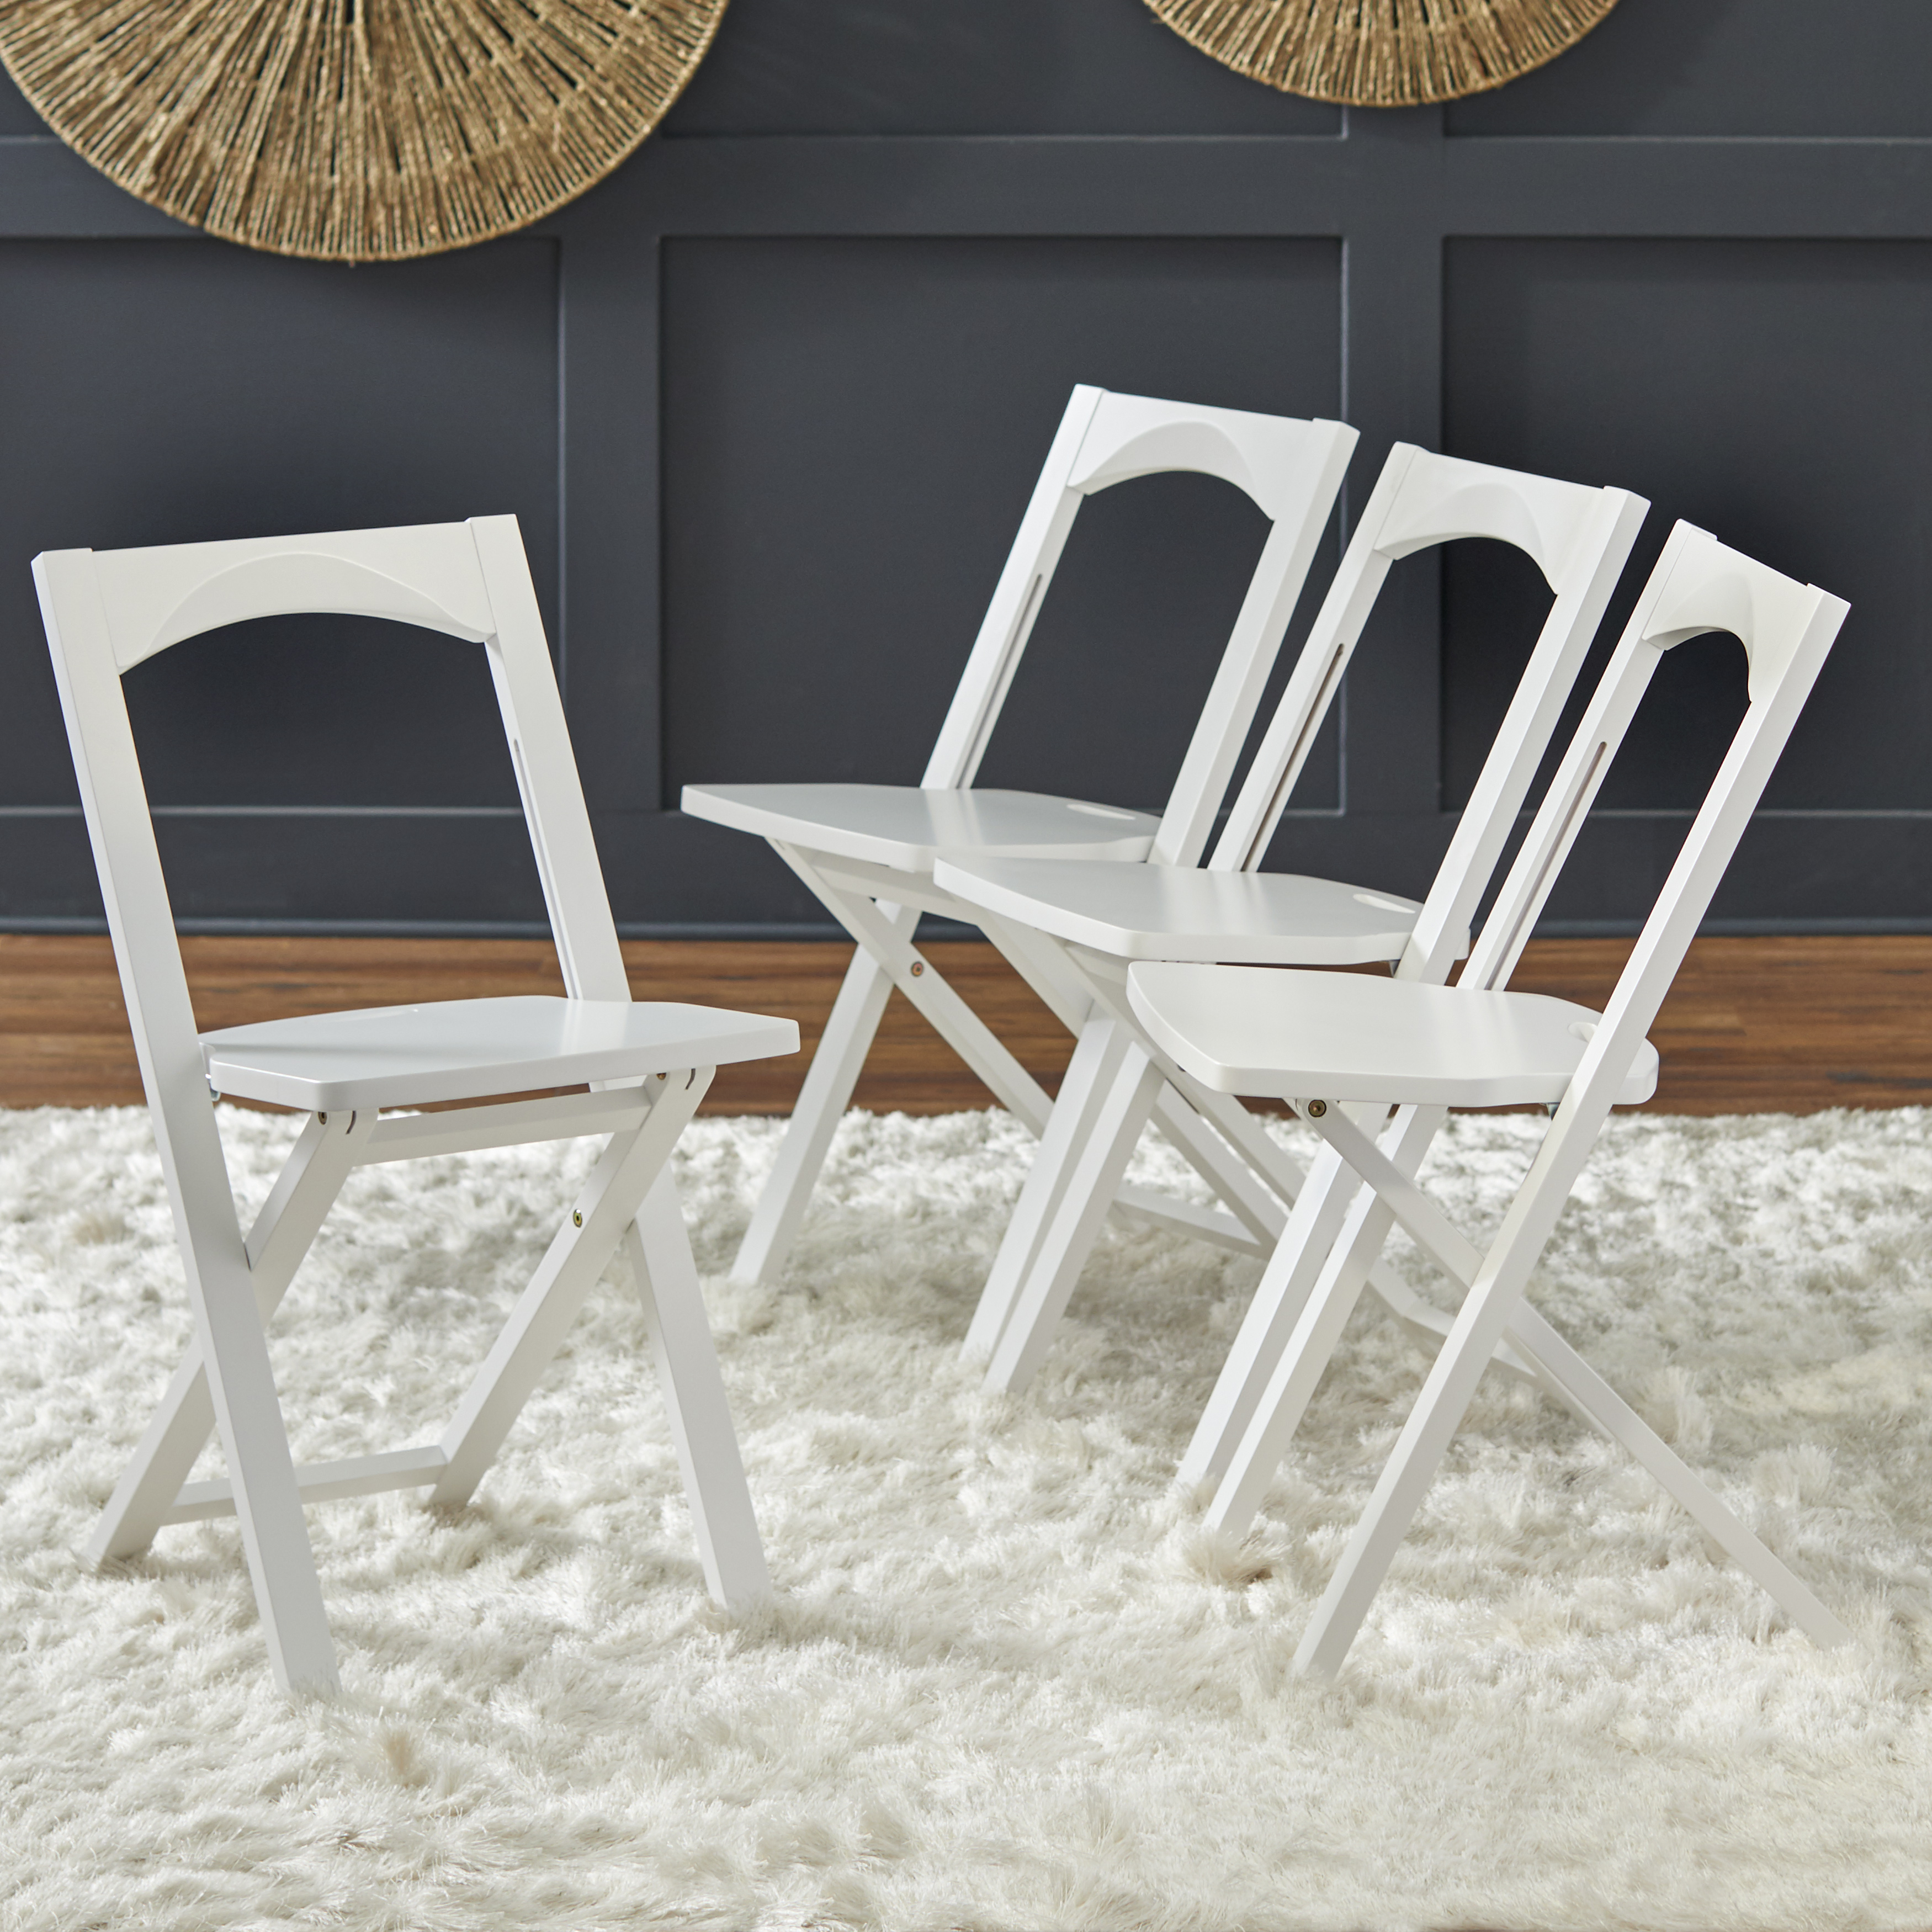 TMS Bonus Folding Chairs- Set of 4, White - image 2 of 5